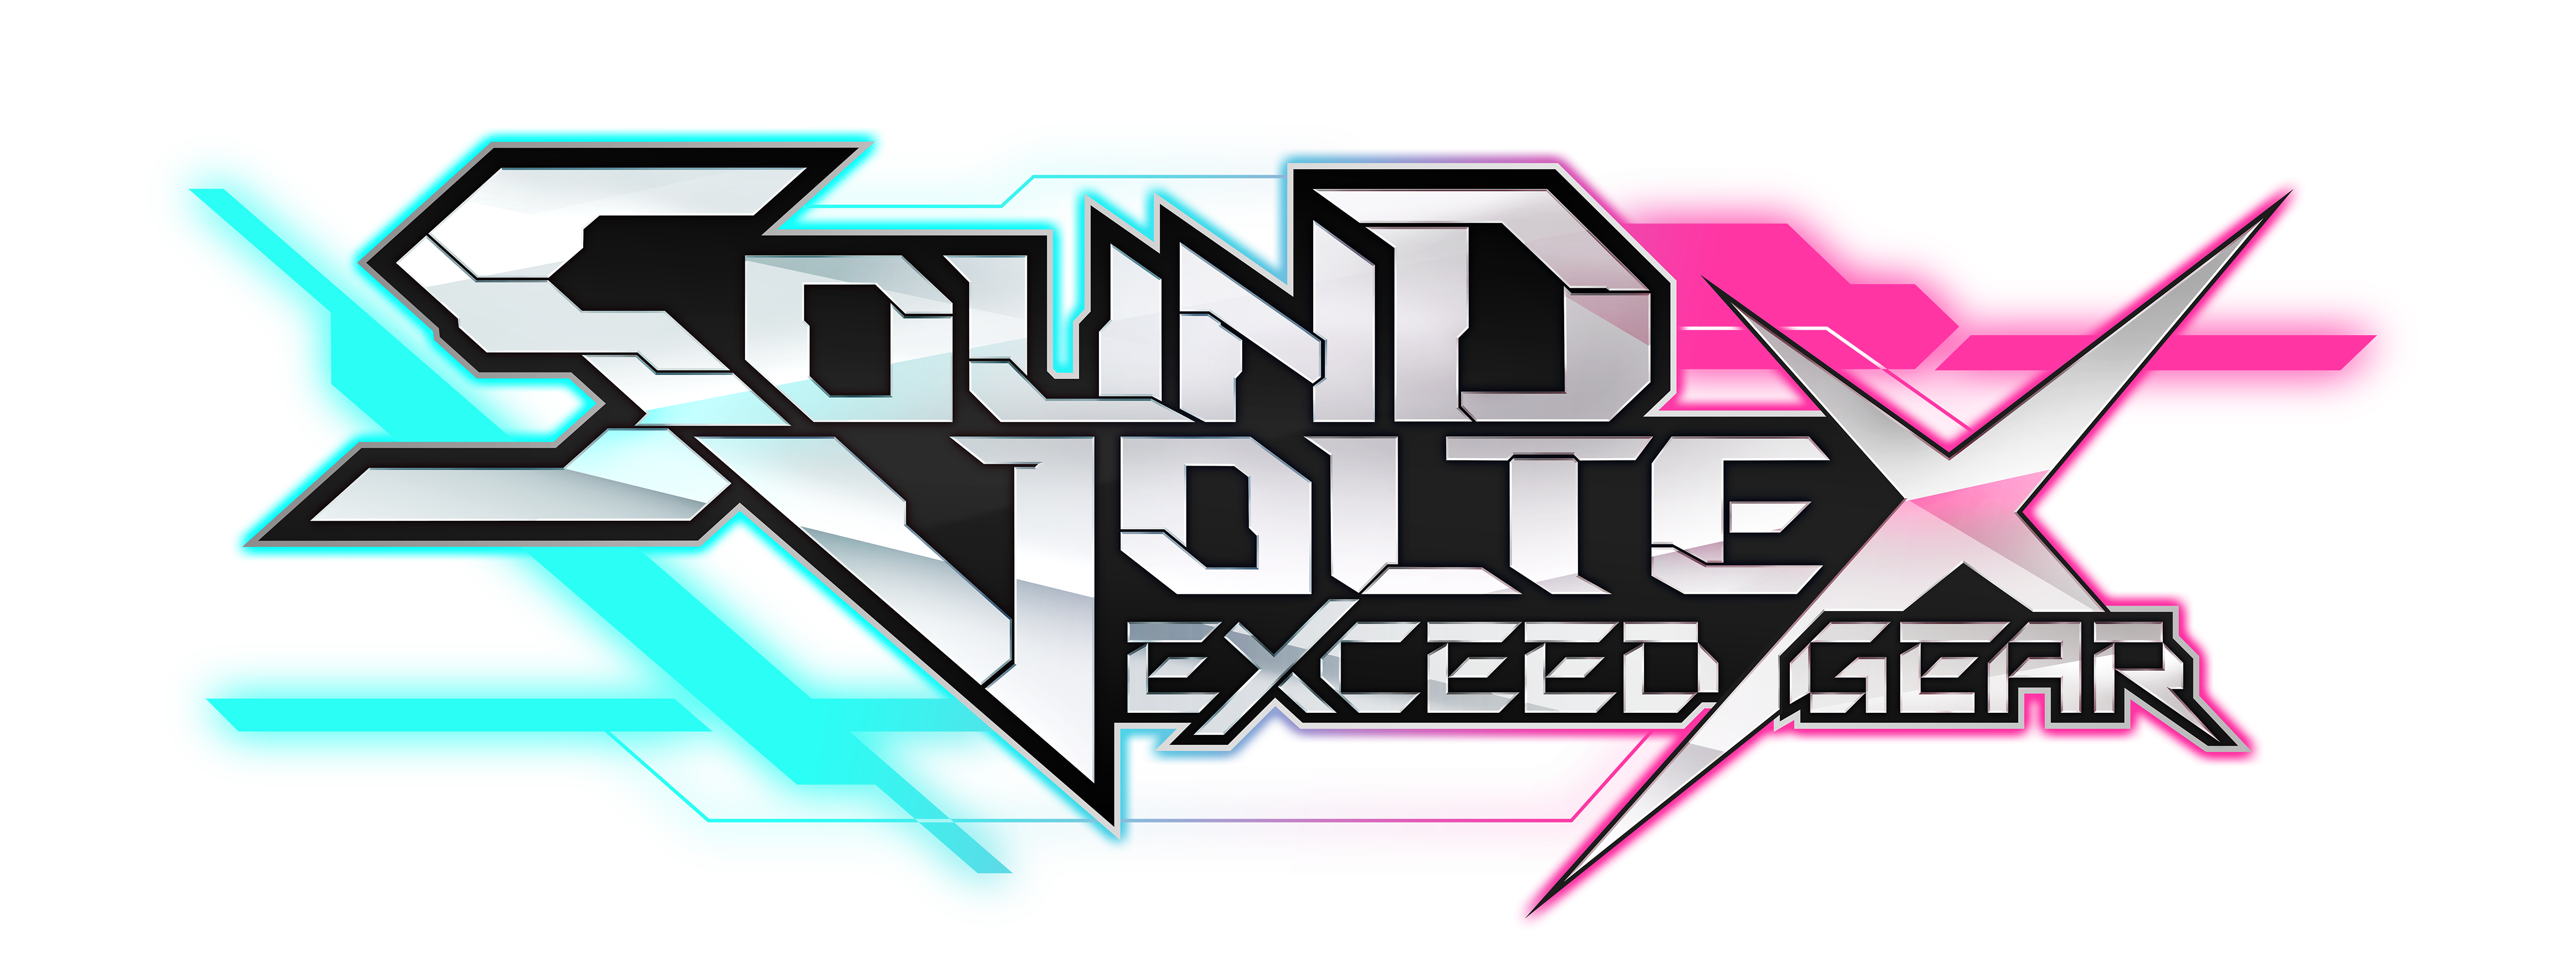 Sound Voltex Exceed Gear が全国アミューズメント施設で稼働開始 株式会社コナミアミューズメントのプレスリリース